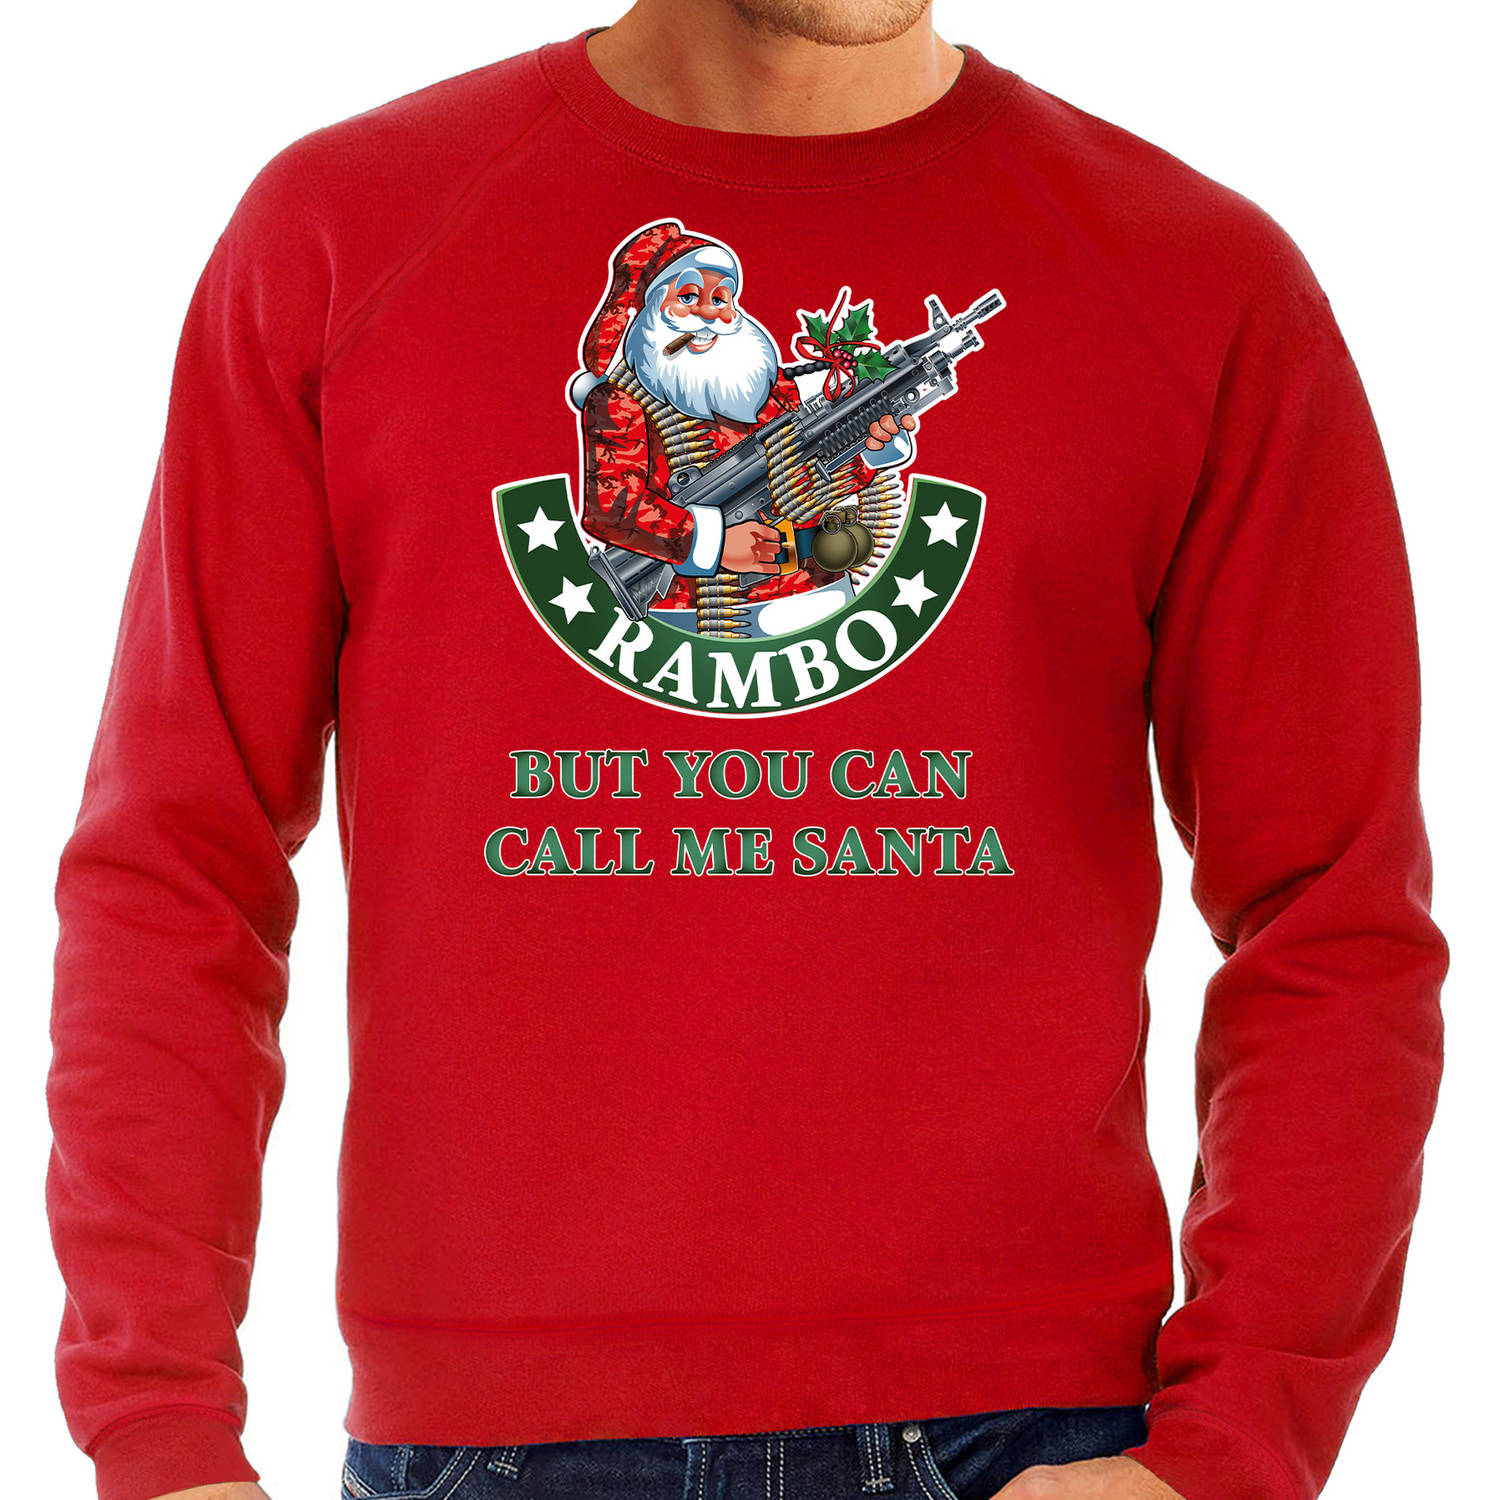 Rode foute Kersttrui / Kerstkleding Rambo but you can call me Santa voor heren grote maten 4XL (60) - kerst truien